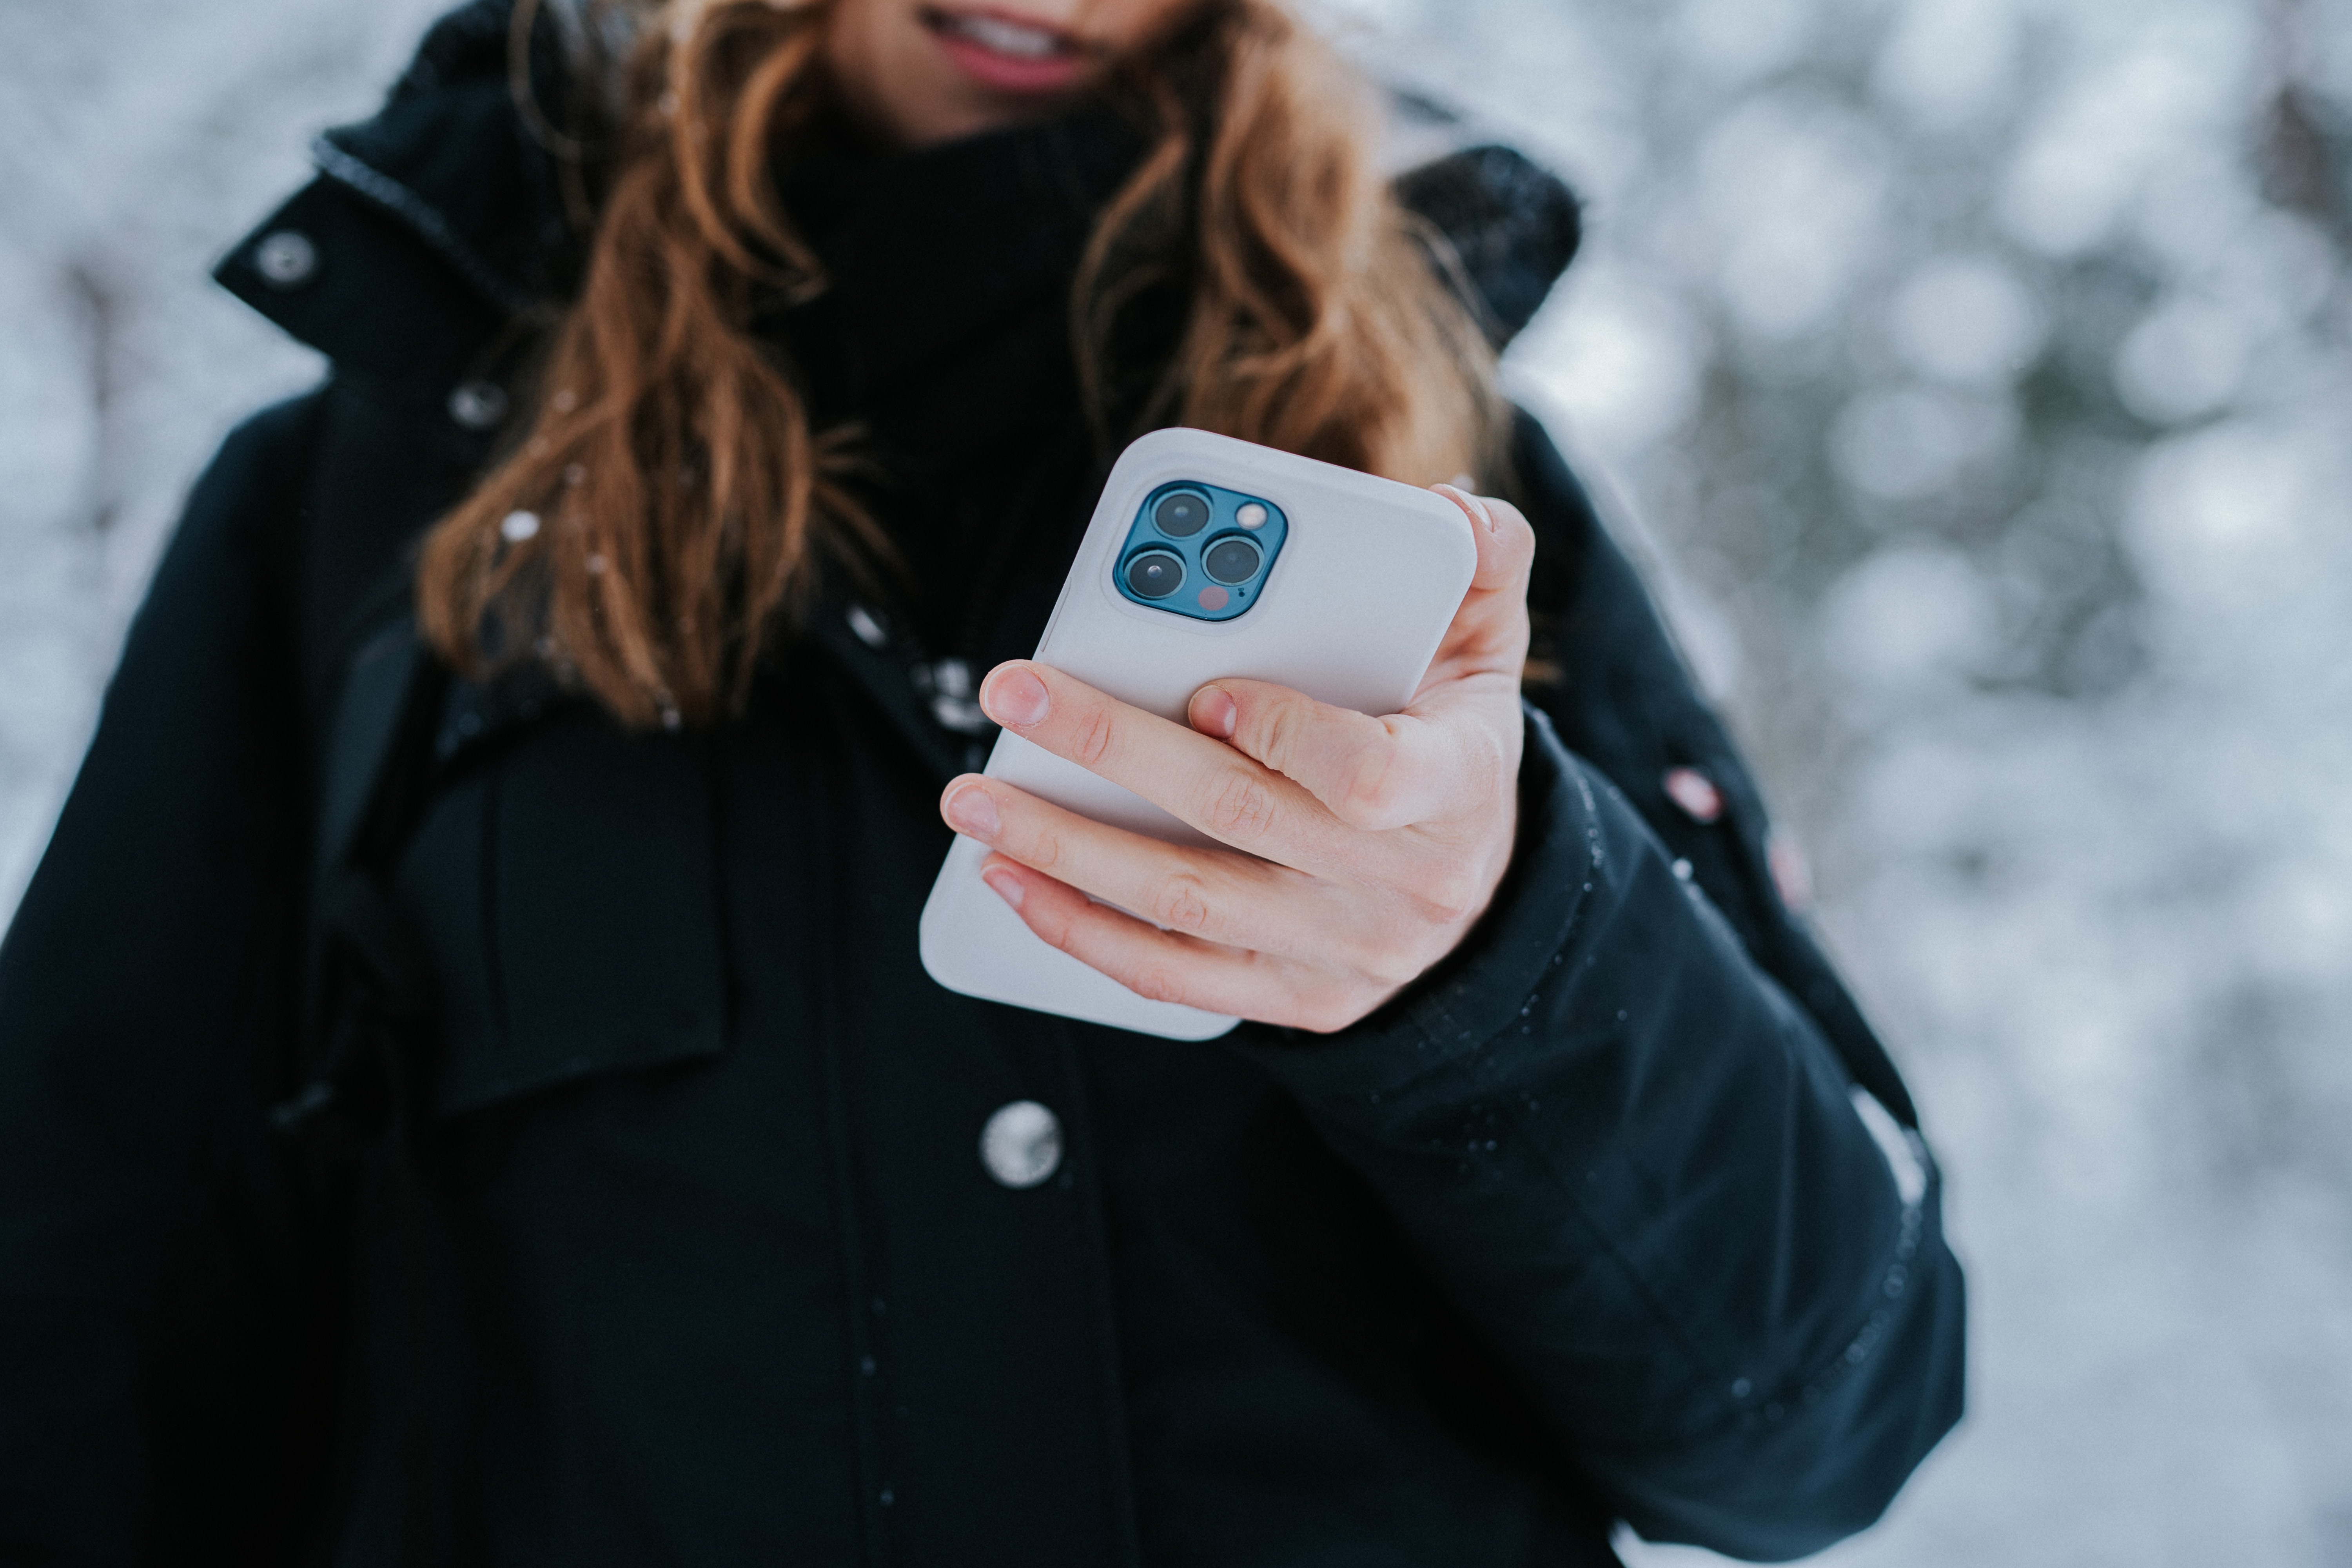 iPhone in de winter, Siri